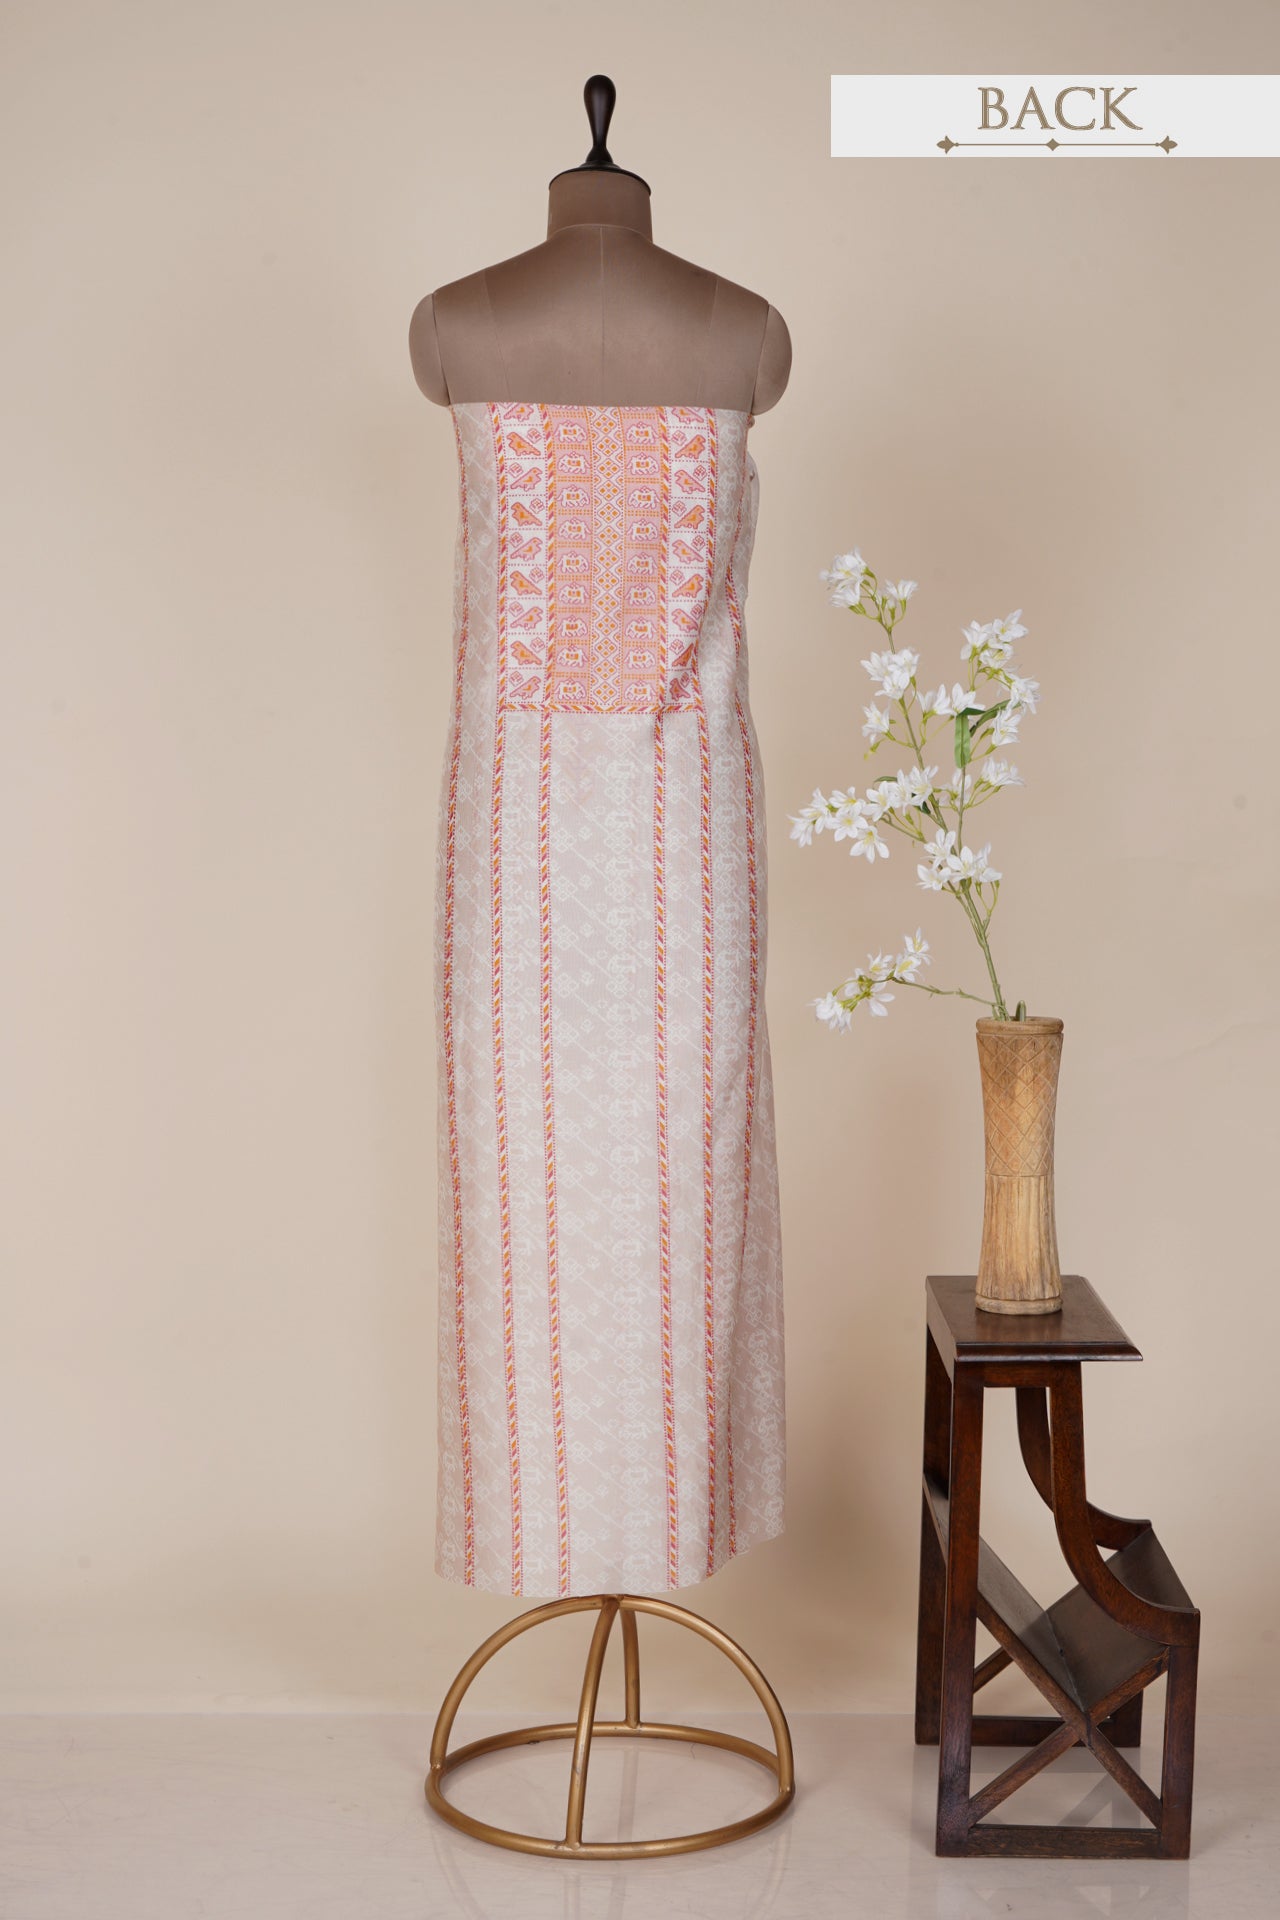 Beige-Peach Color Digital Printed Patola Pattern Cotton Linen Suit with Chanderi Dupatta